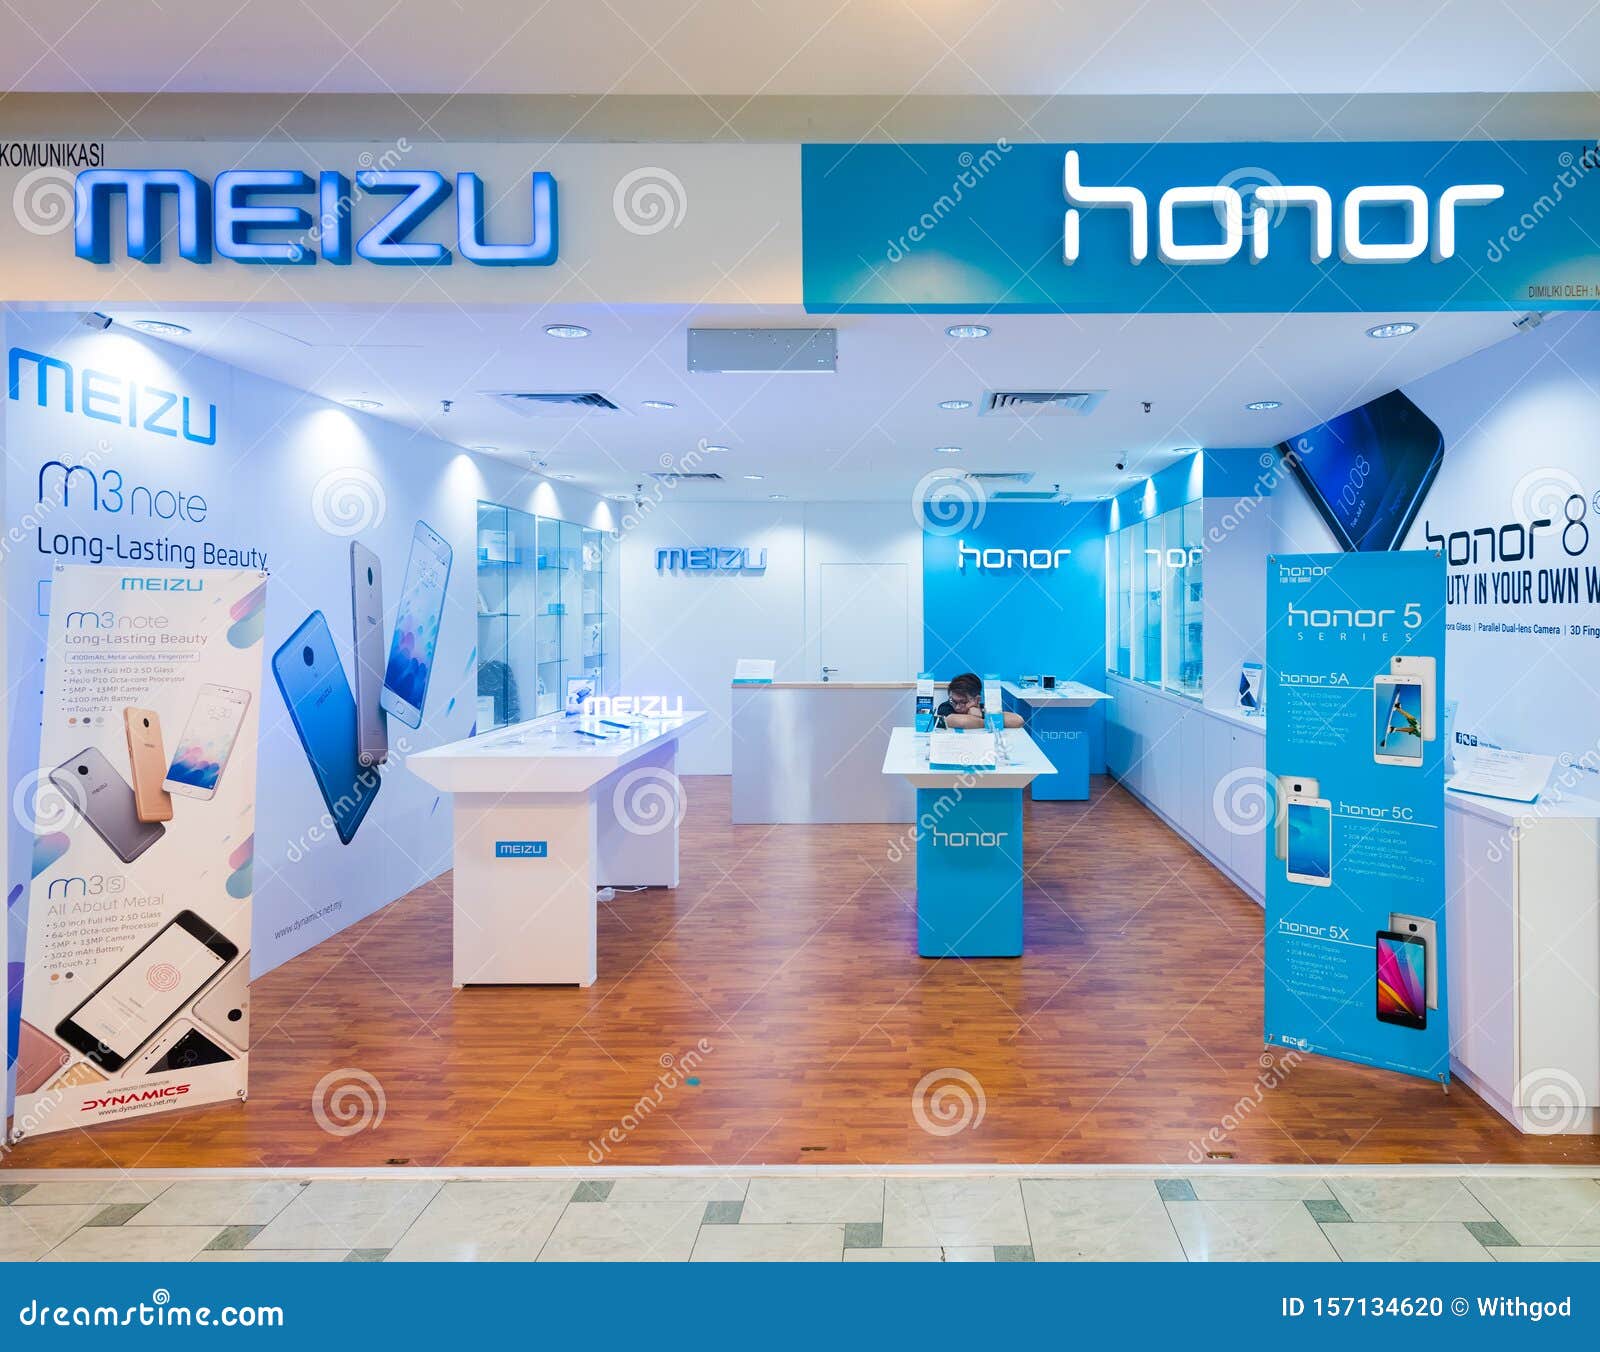 Met pensioen gaan geboren Niet verwacht Meizu and Honor Store in Plaza Low Yat, Kuala Lumpur Editorial Image -  Image of information, life: 157134620